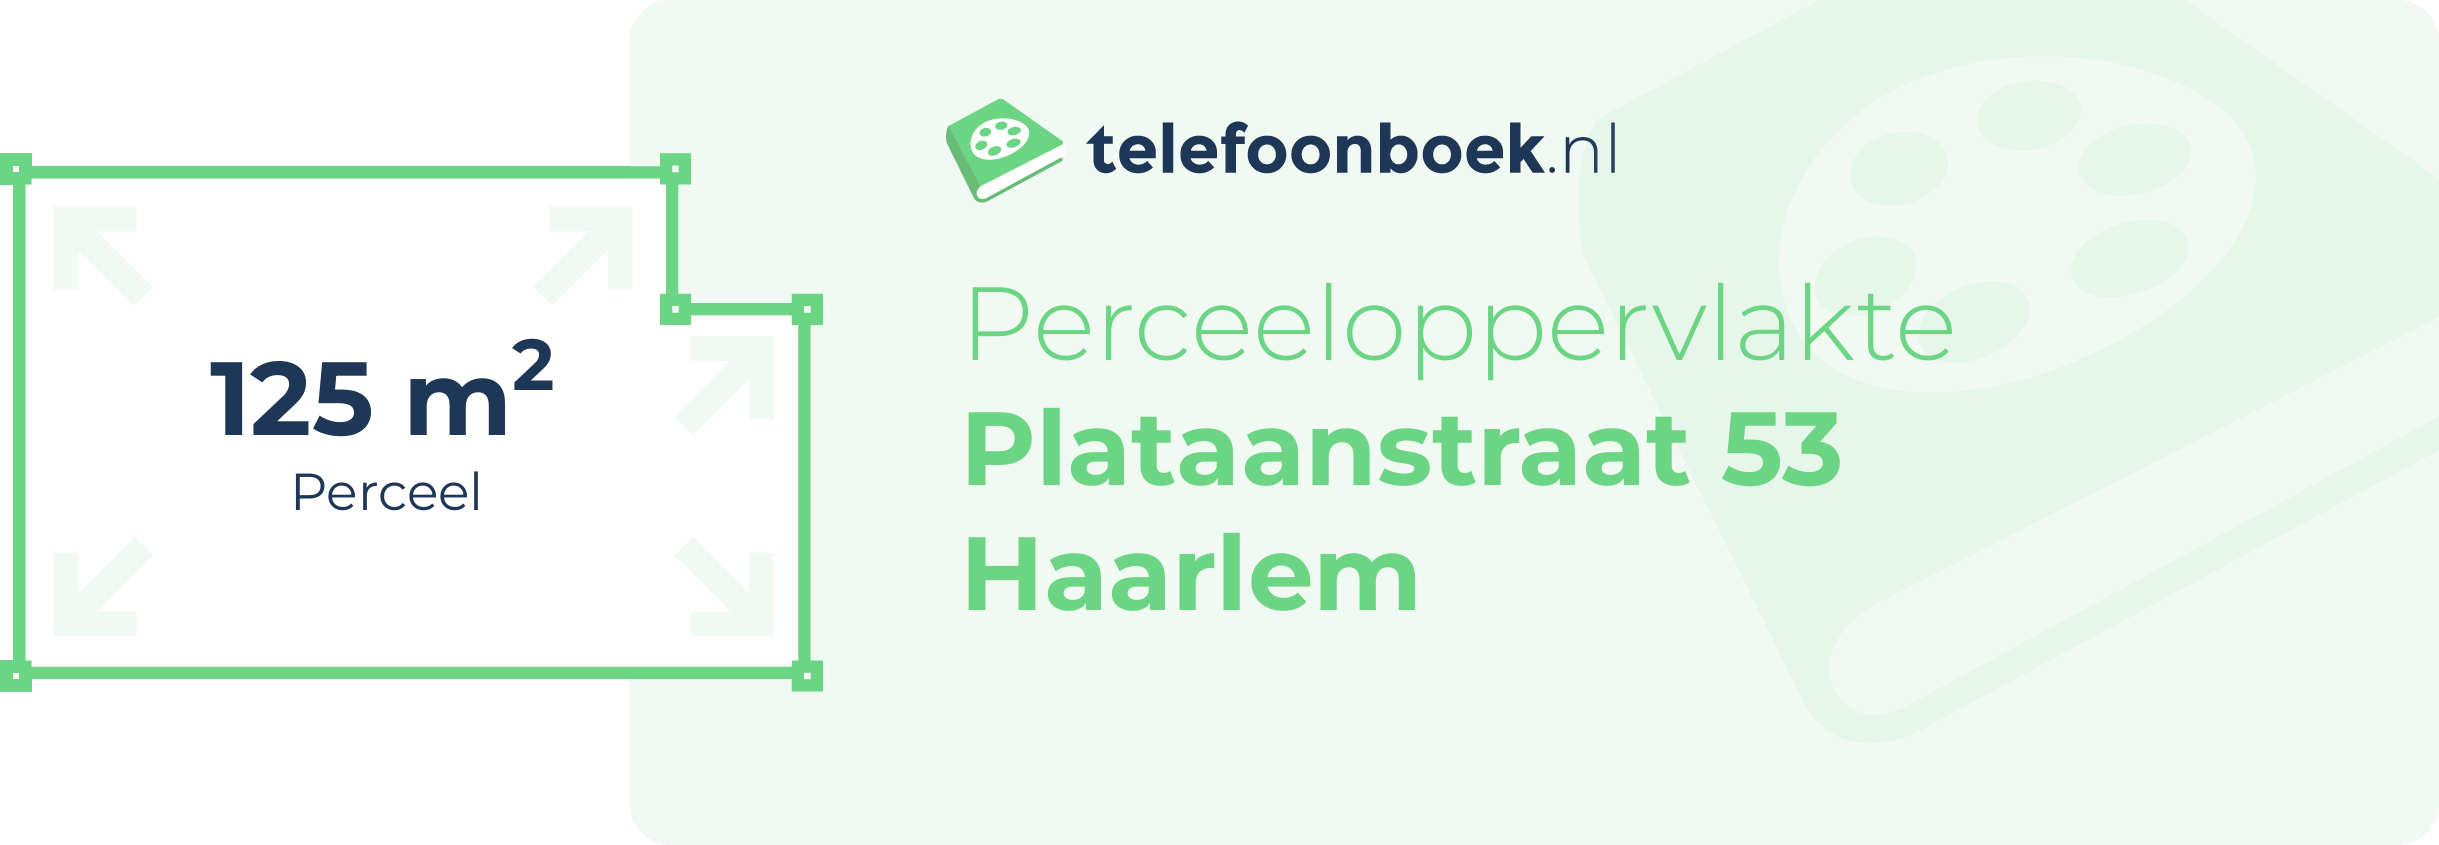 Perceeloppervlakte Plataanstraat 53 Haarlem